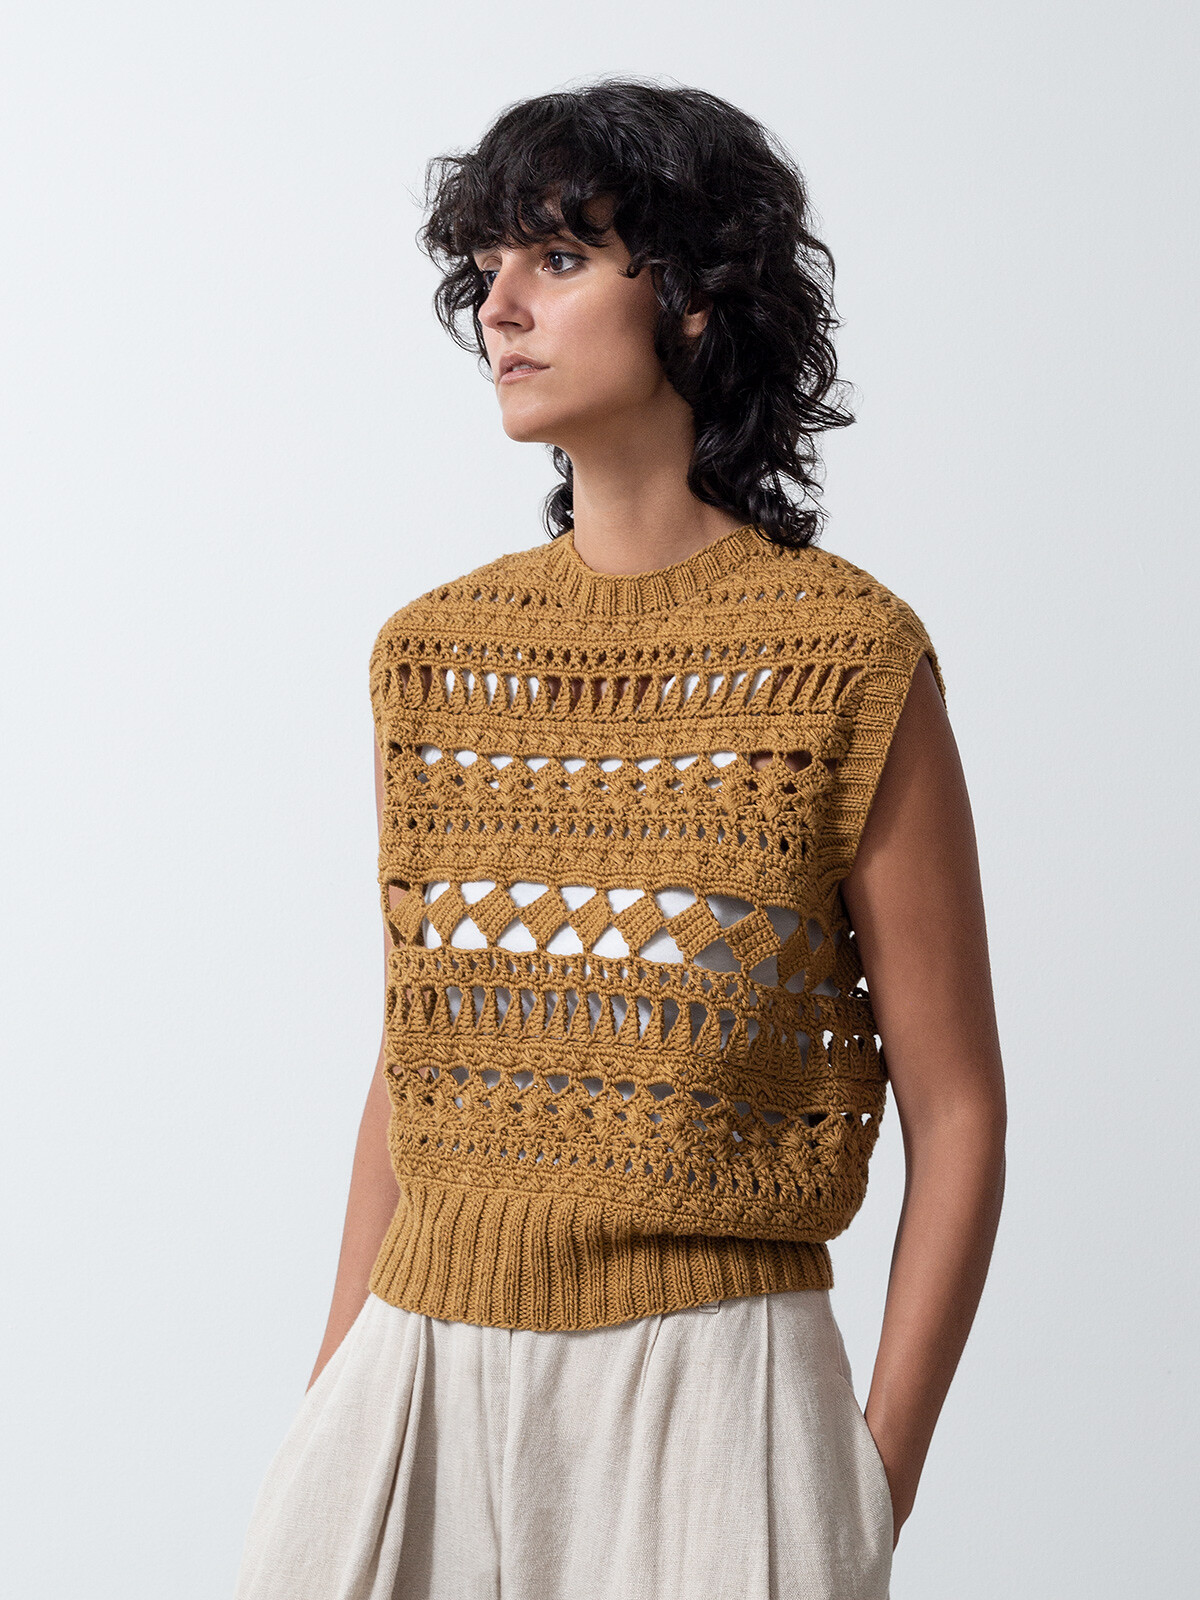 Crochet vest Image